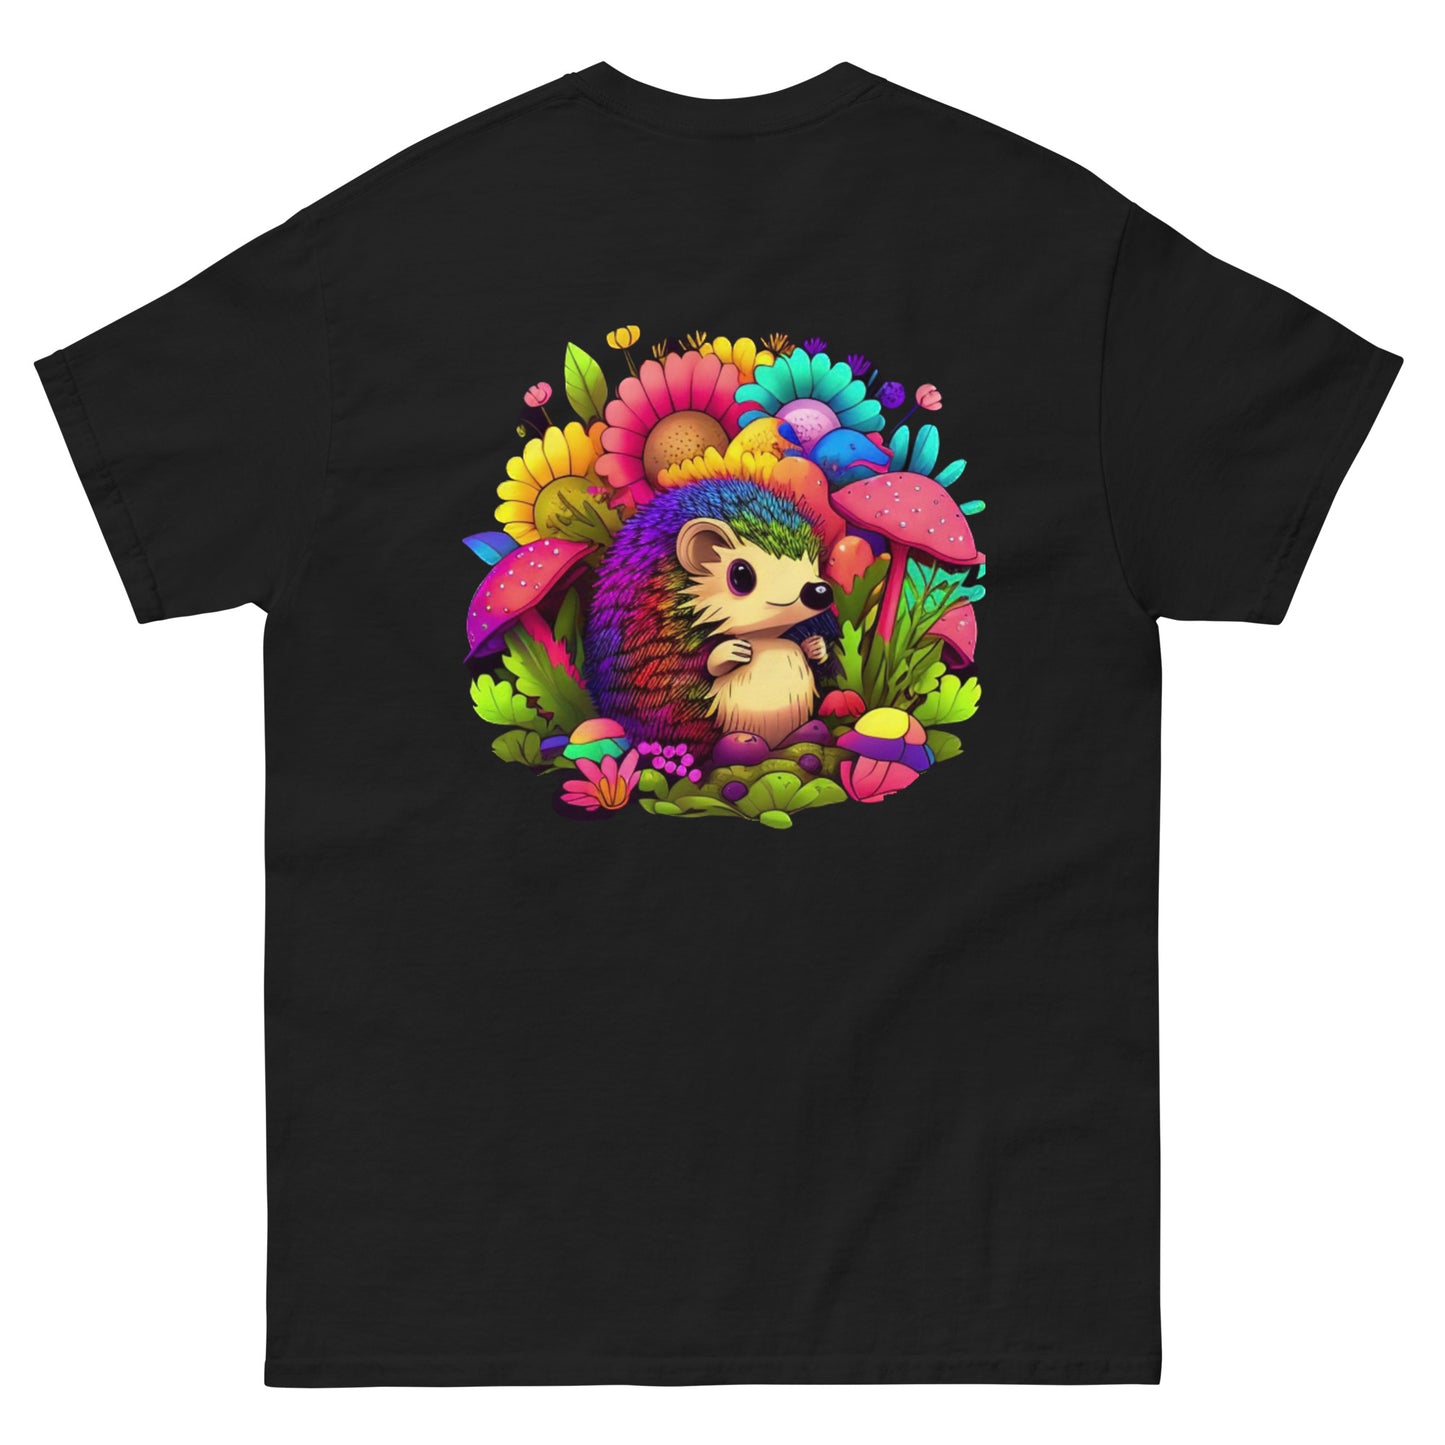 Pepita the hedgehog t-shirt